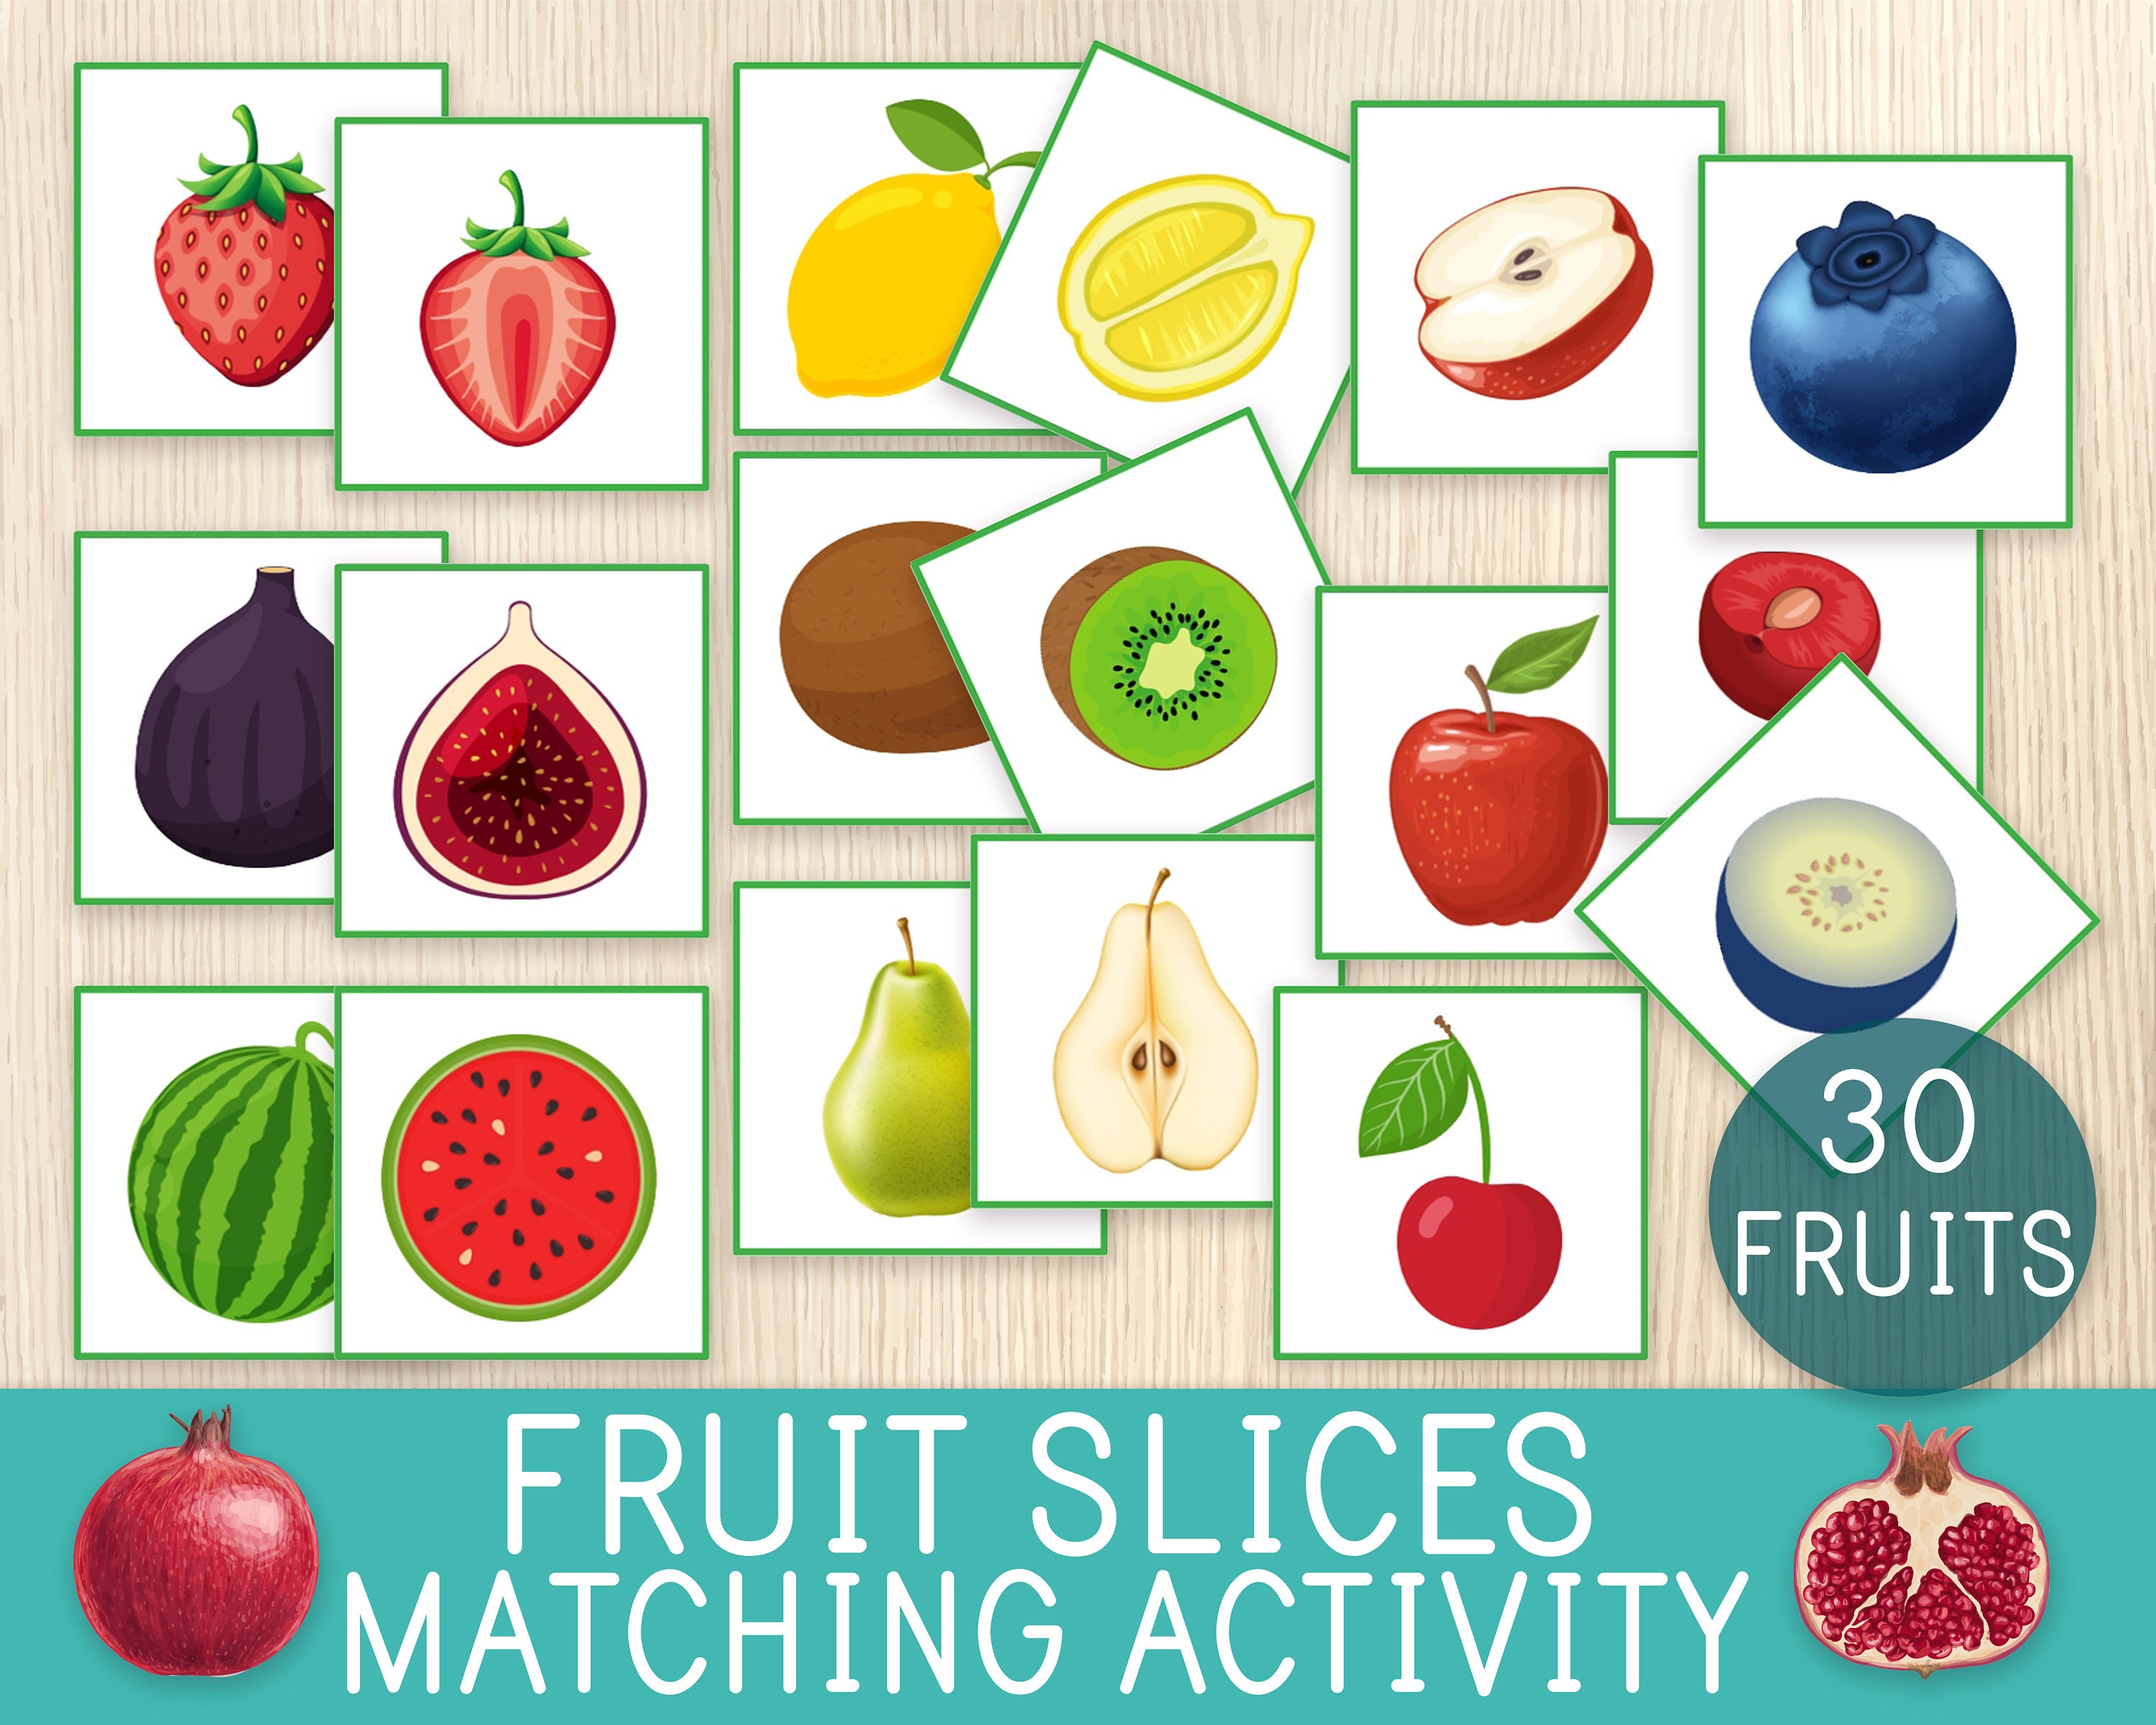 fruit slices matching activity outside inside fruits etsy